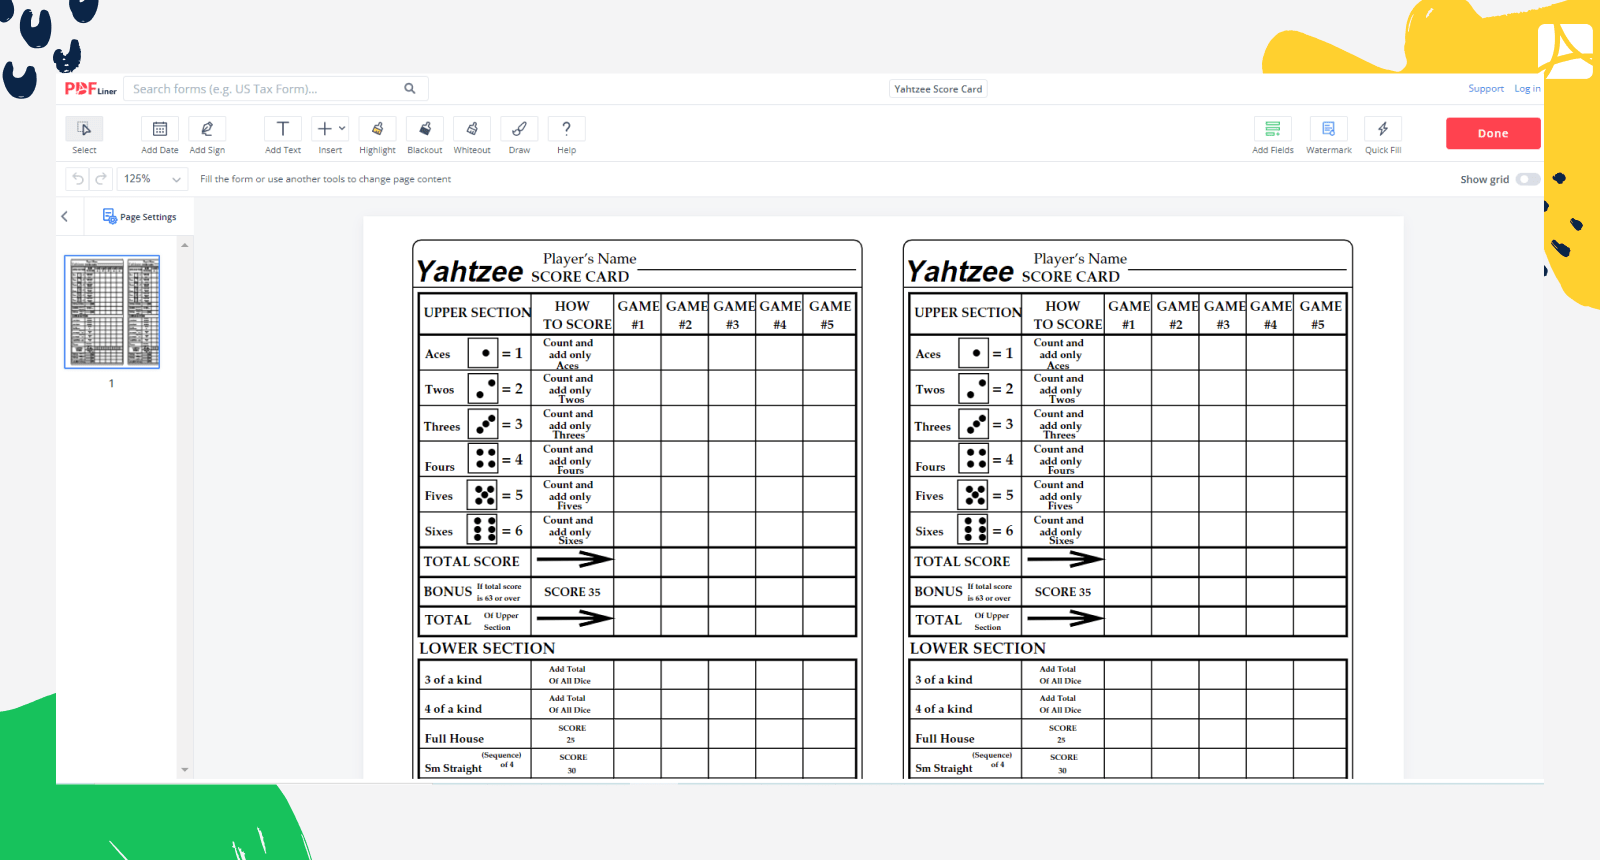 Yahtzee Score Card on PDFLiner